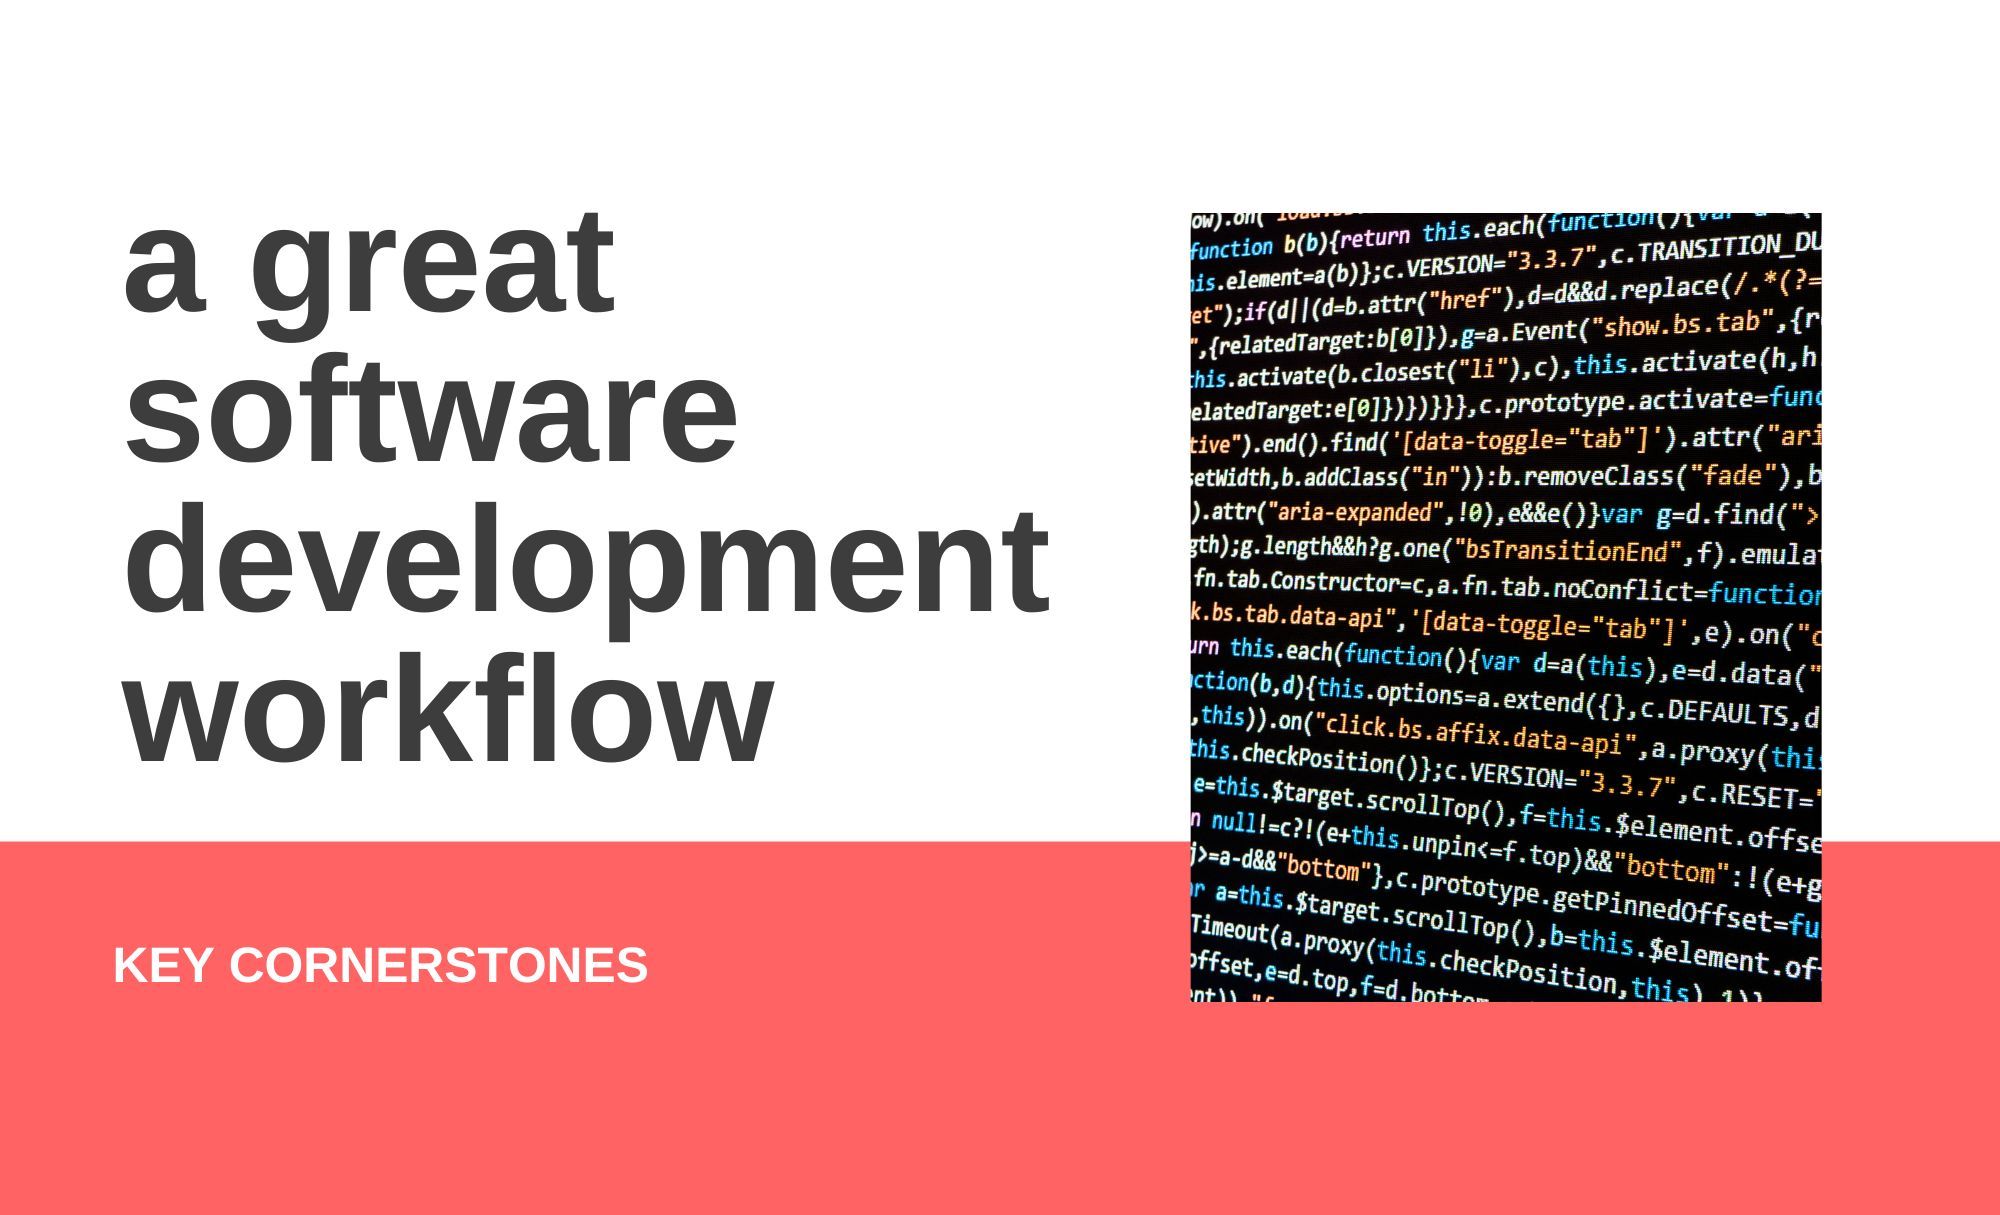 Key cornerstones of a great software development workflow (workflow included)